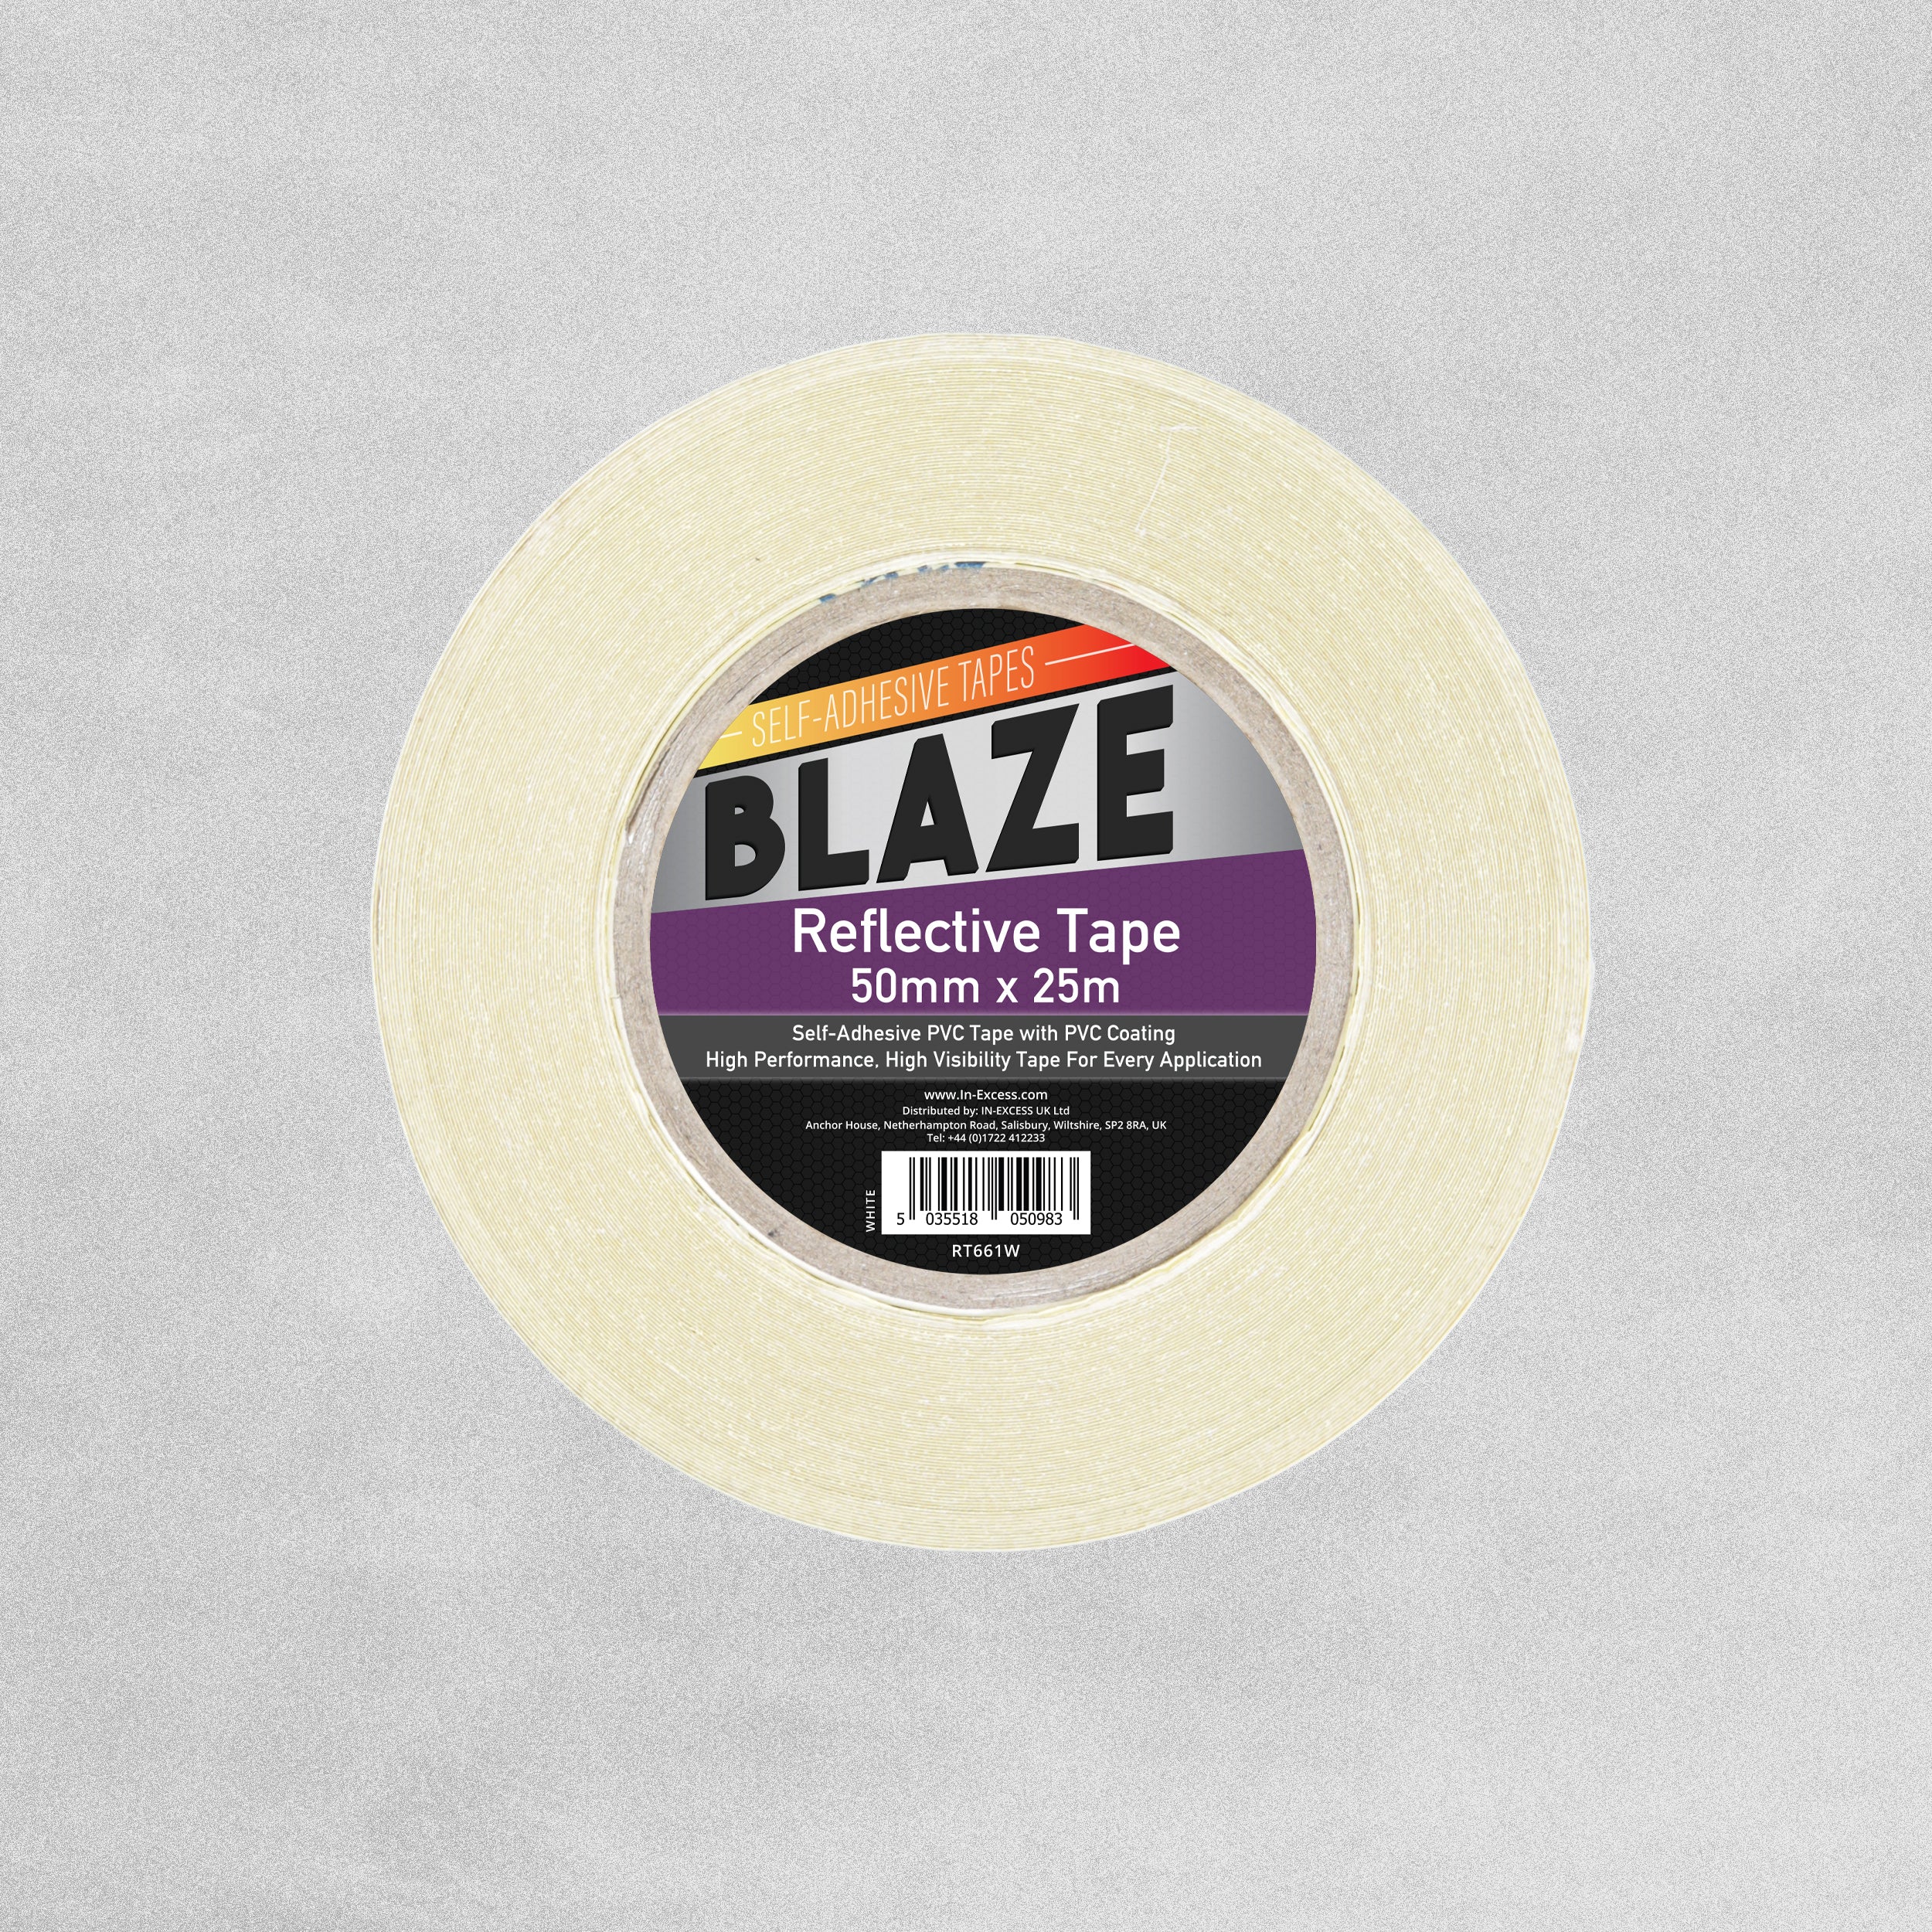 Blaze Reflective Tape 50mm x 25m - White